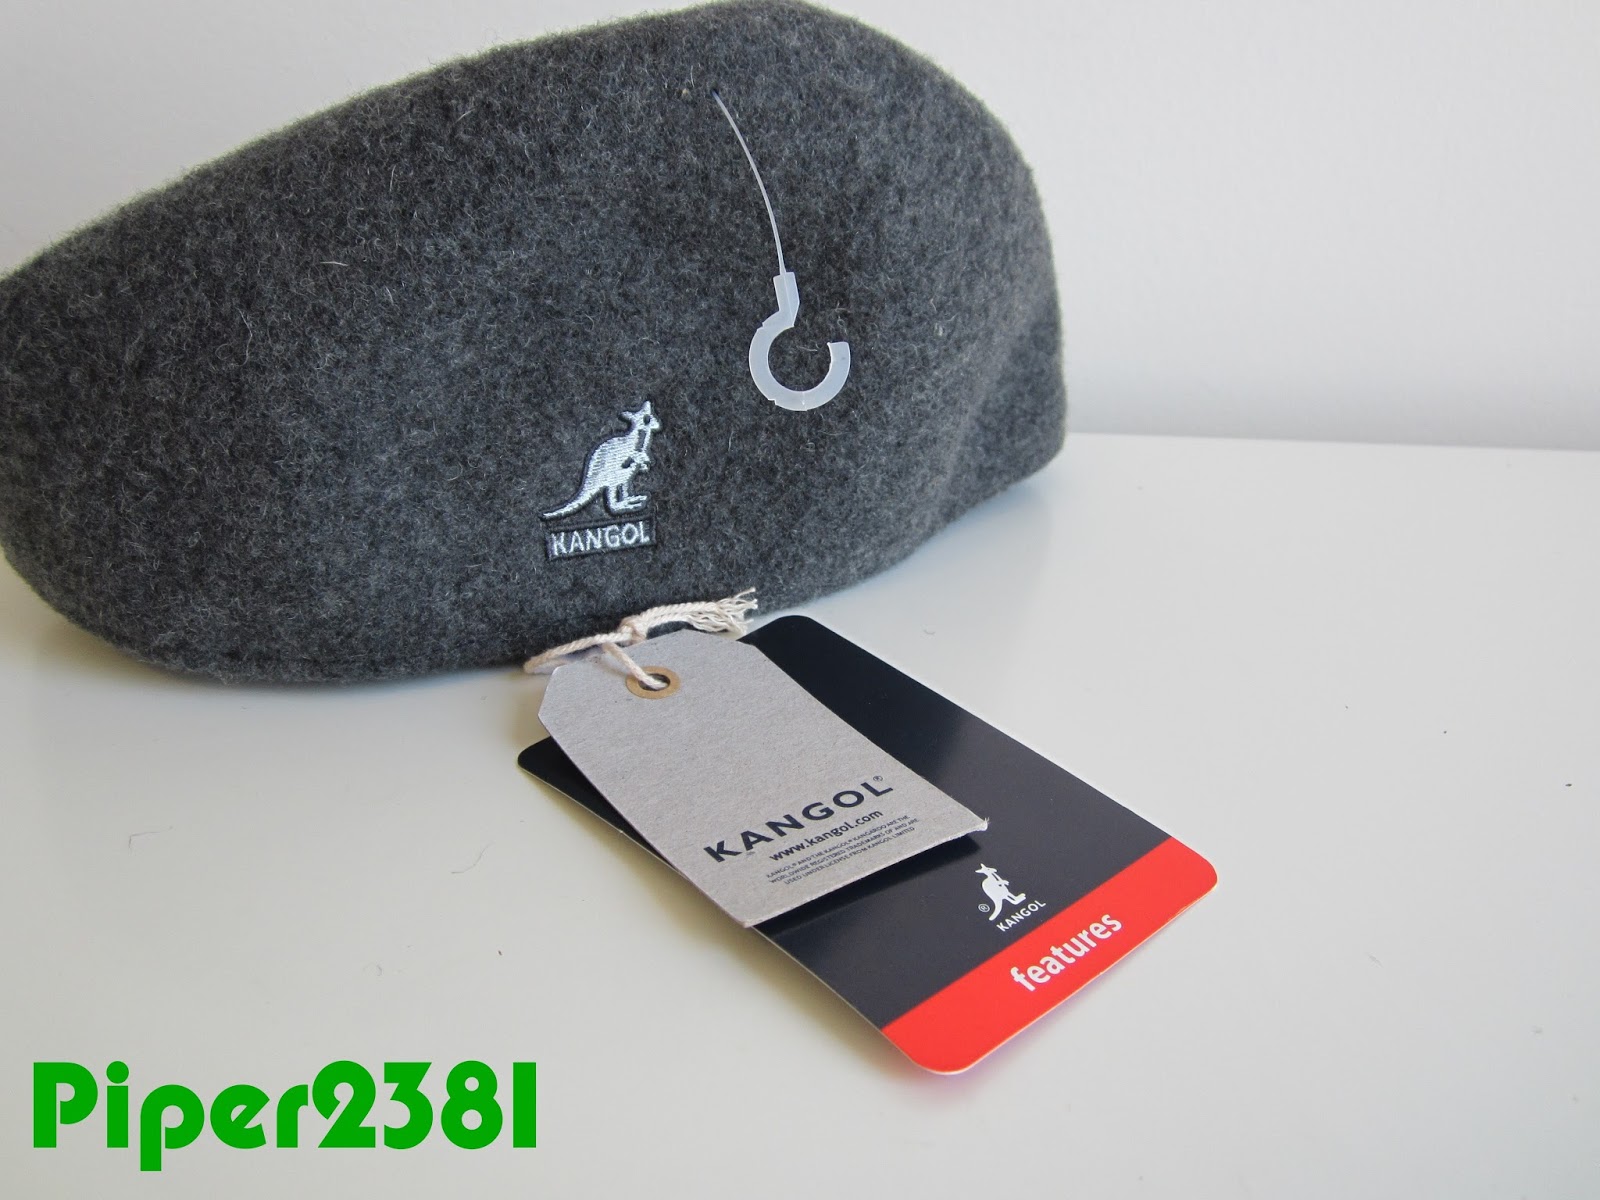 Piper2381: Kangol Hat